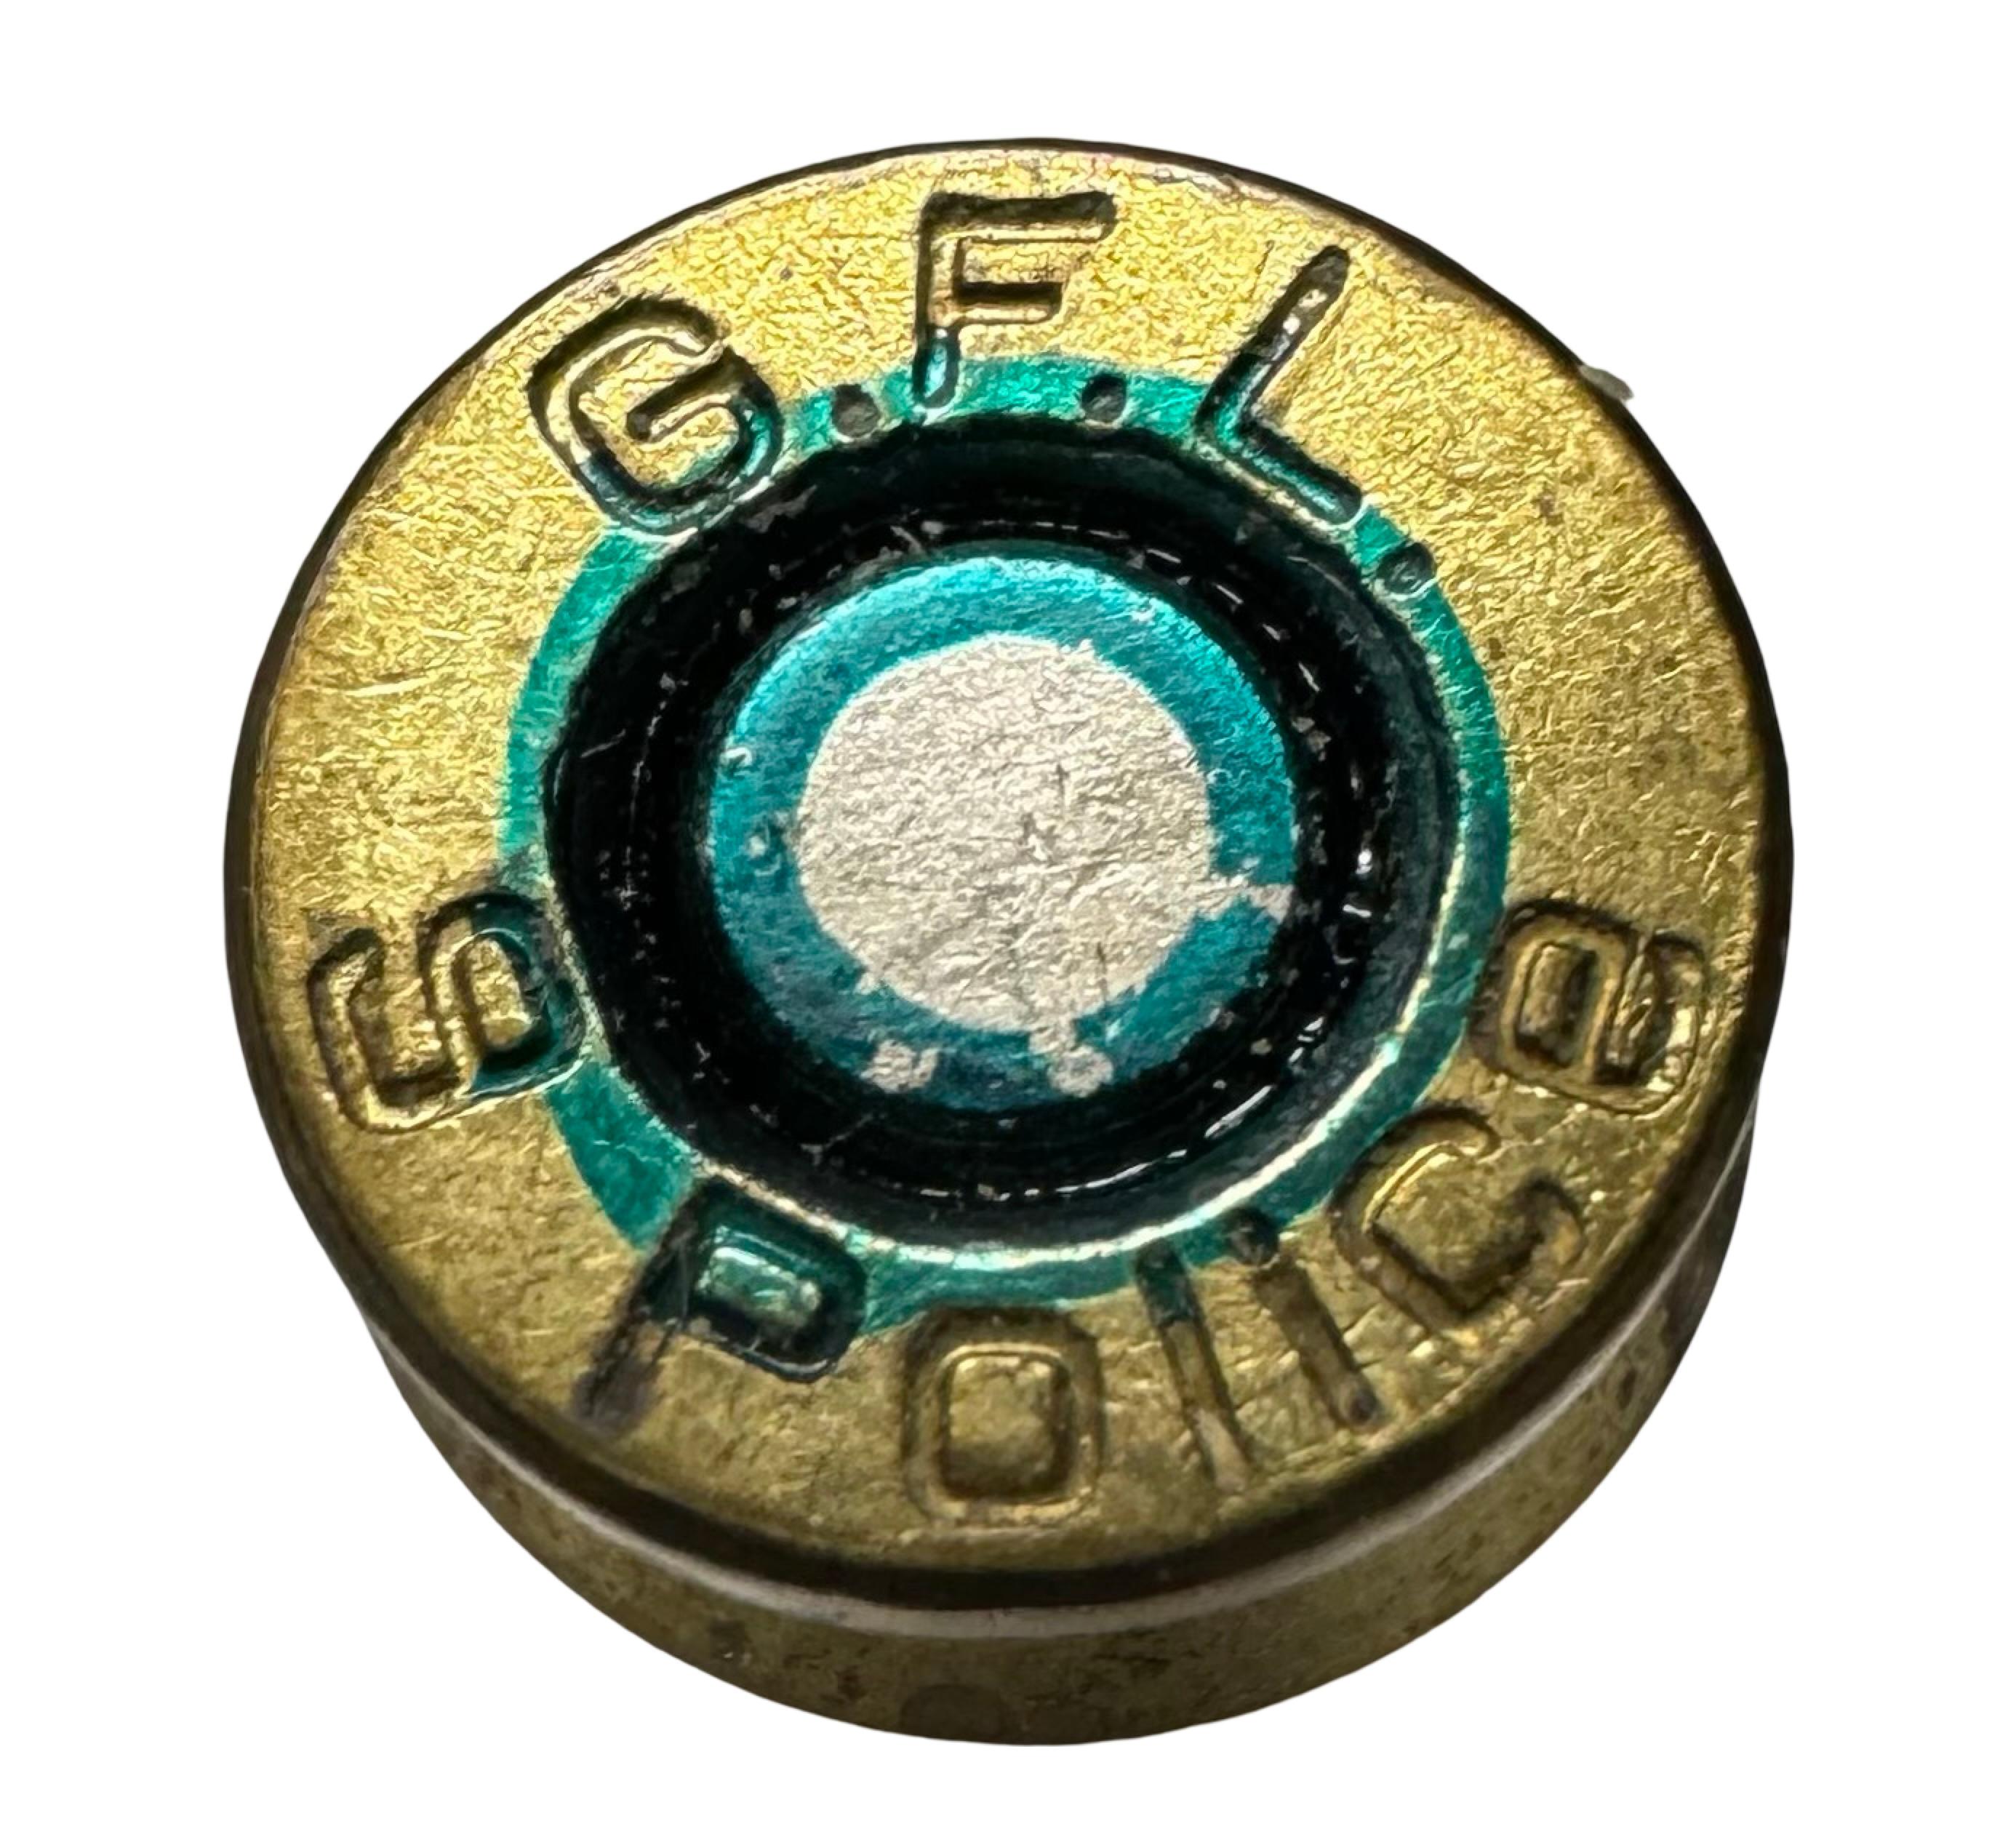 (2) RARE 9x18mm ULTRA POLICE Cartridges